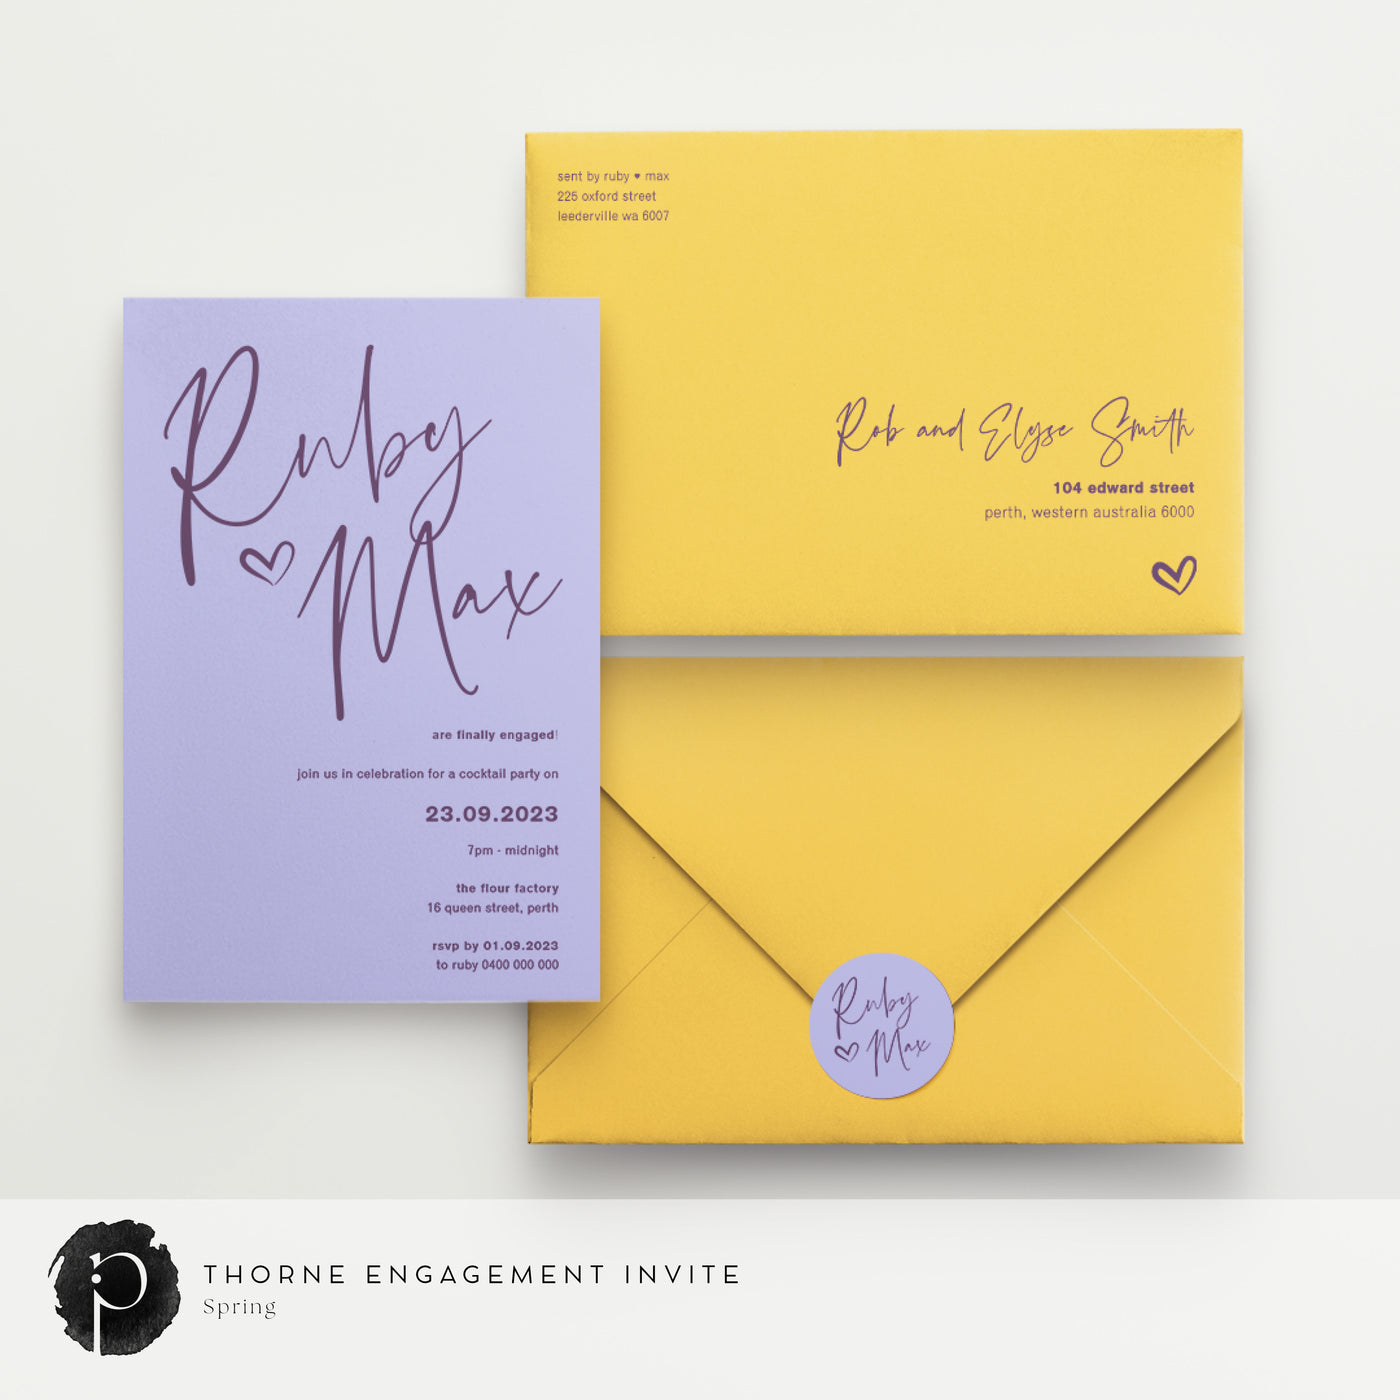 Thorne - Engagement Invitations